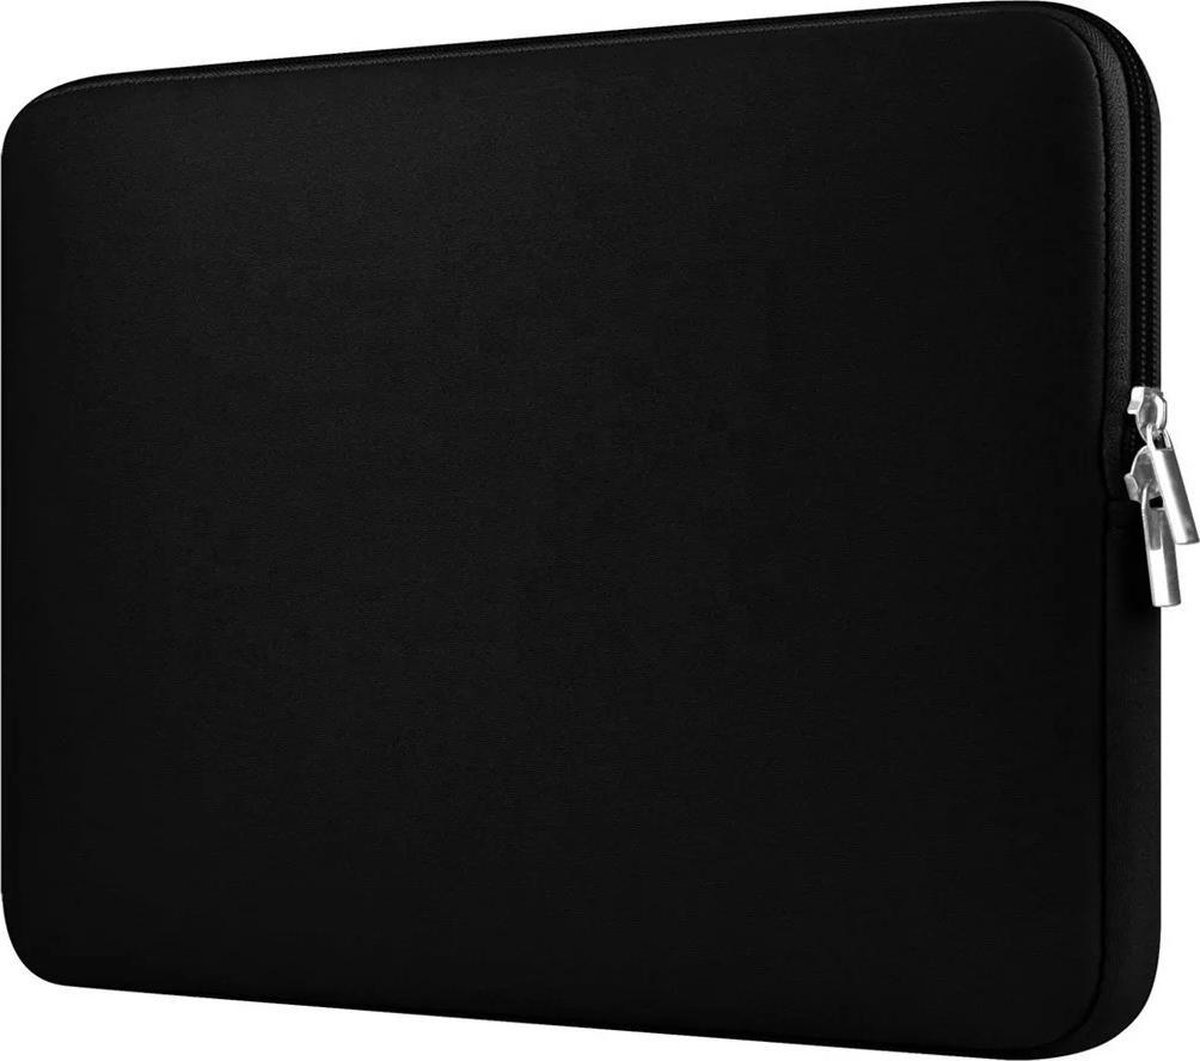 15,6 inch – laptophoes – sleeve – zeer goede kwaliteit – kleur zwart - unisex - Soft Touch - spatwaterbestending